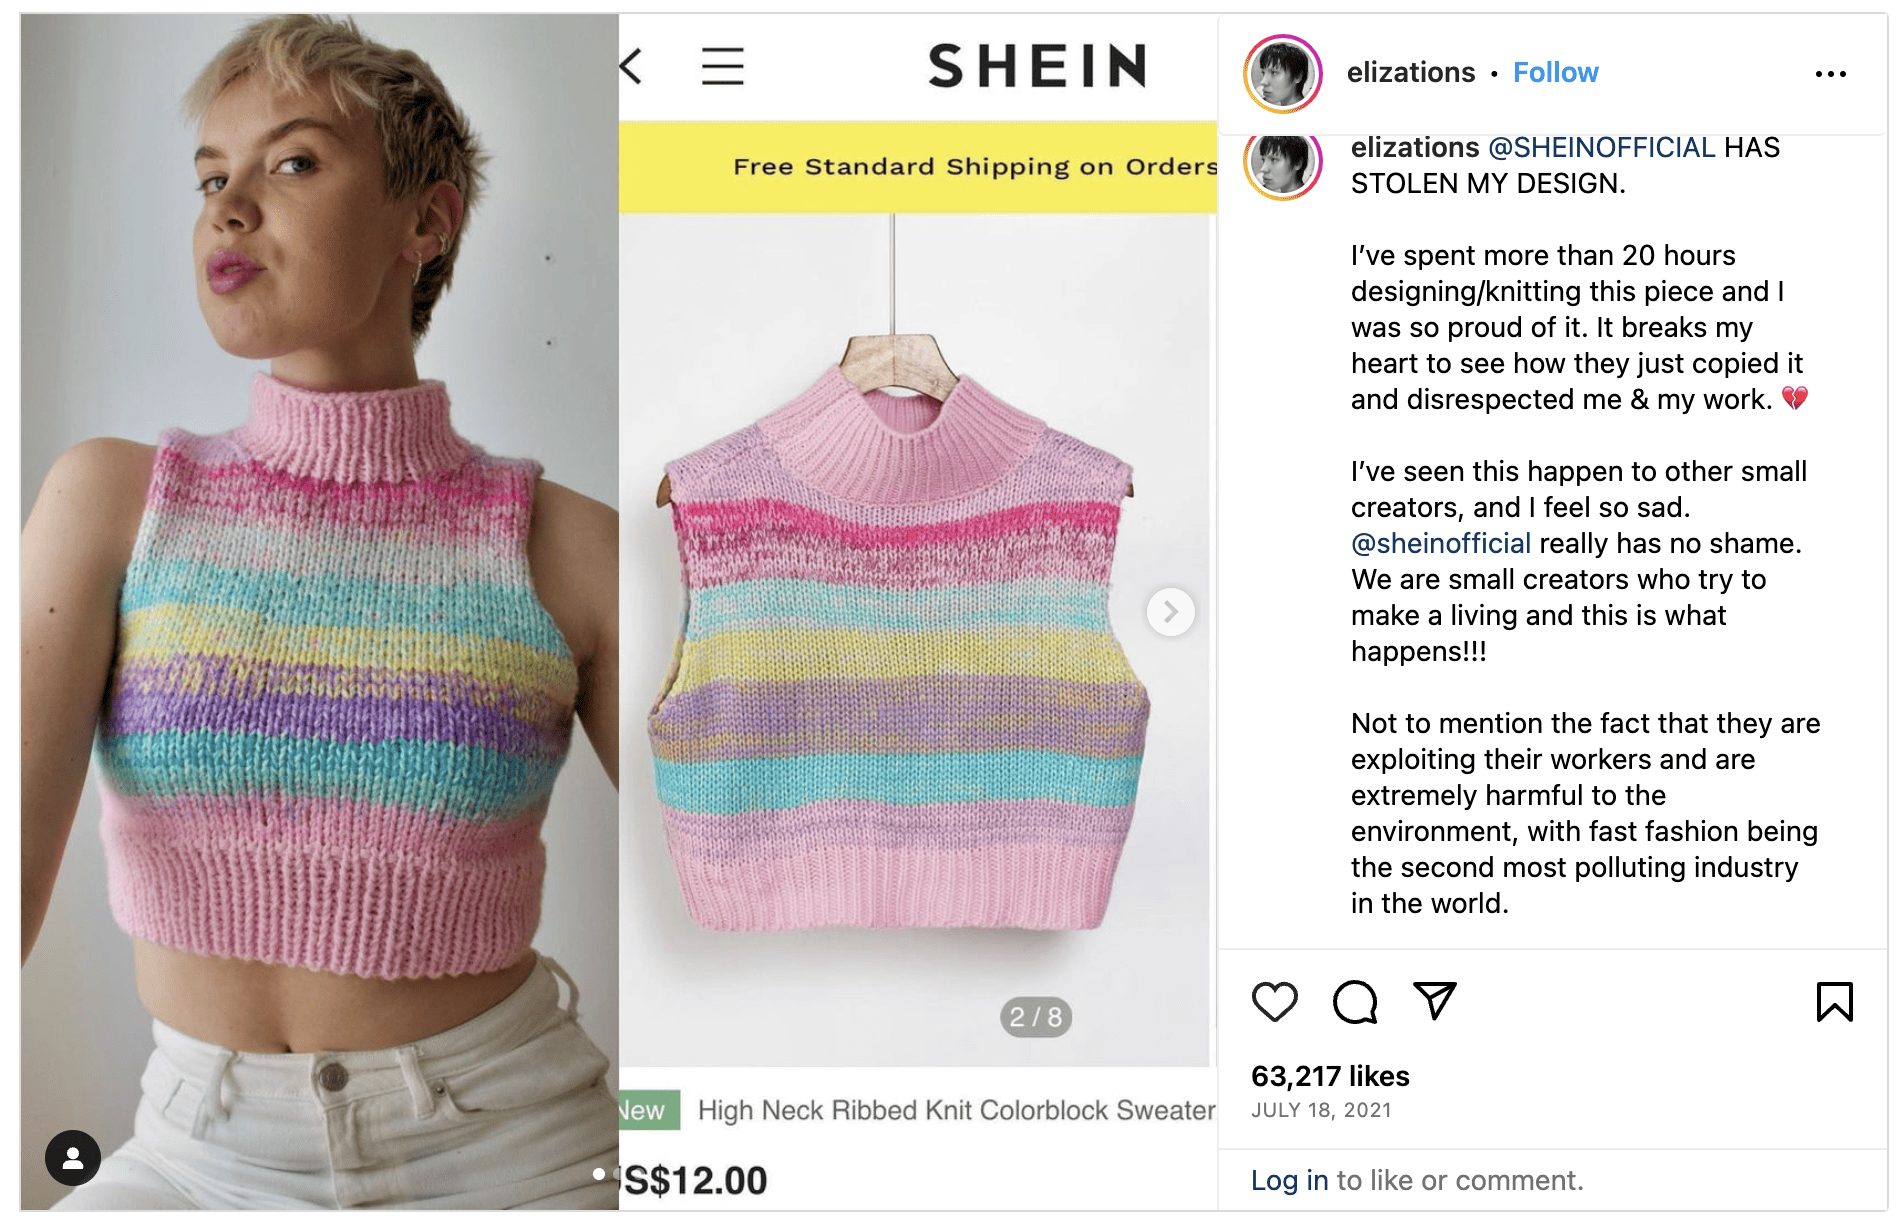 SHEIN steals designs from independent designers